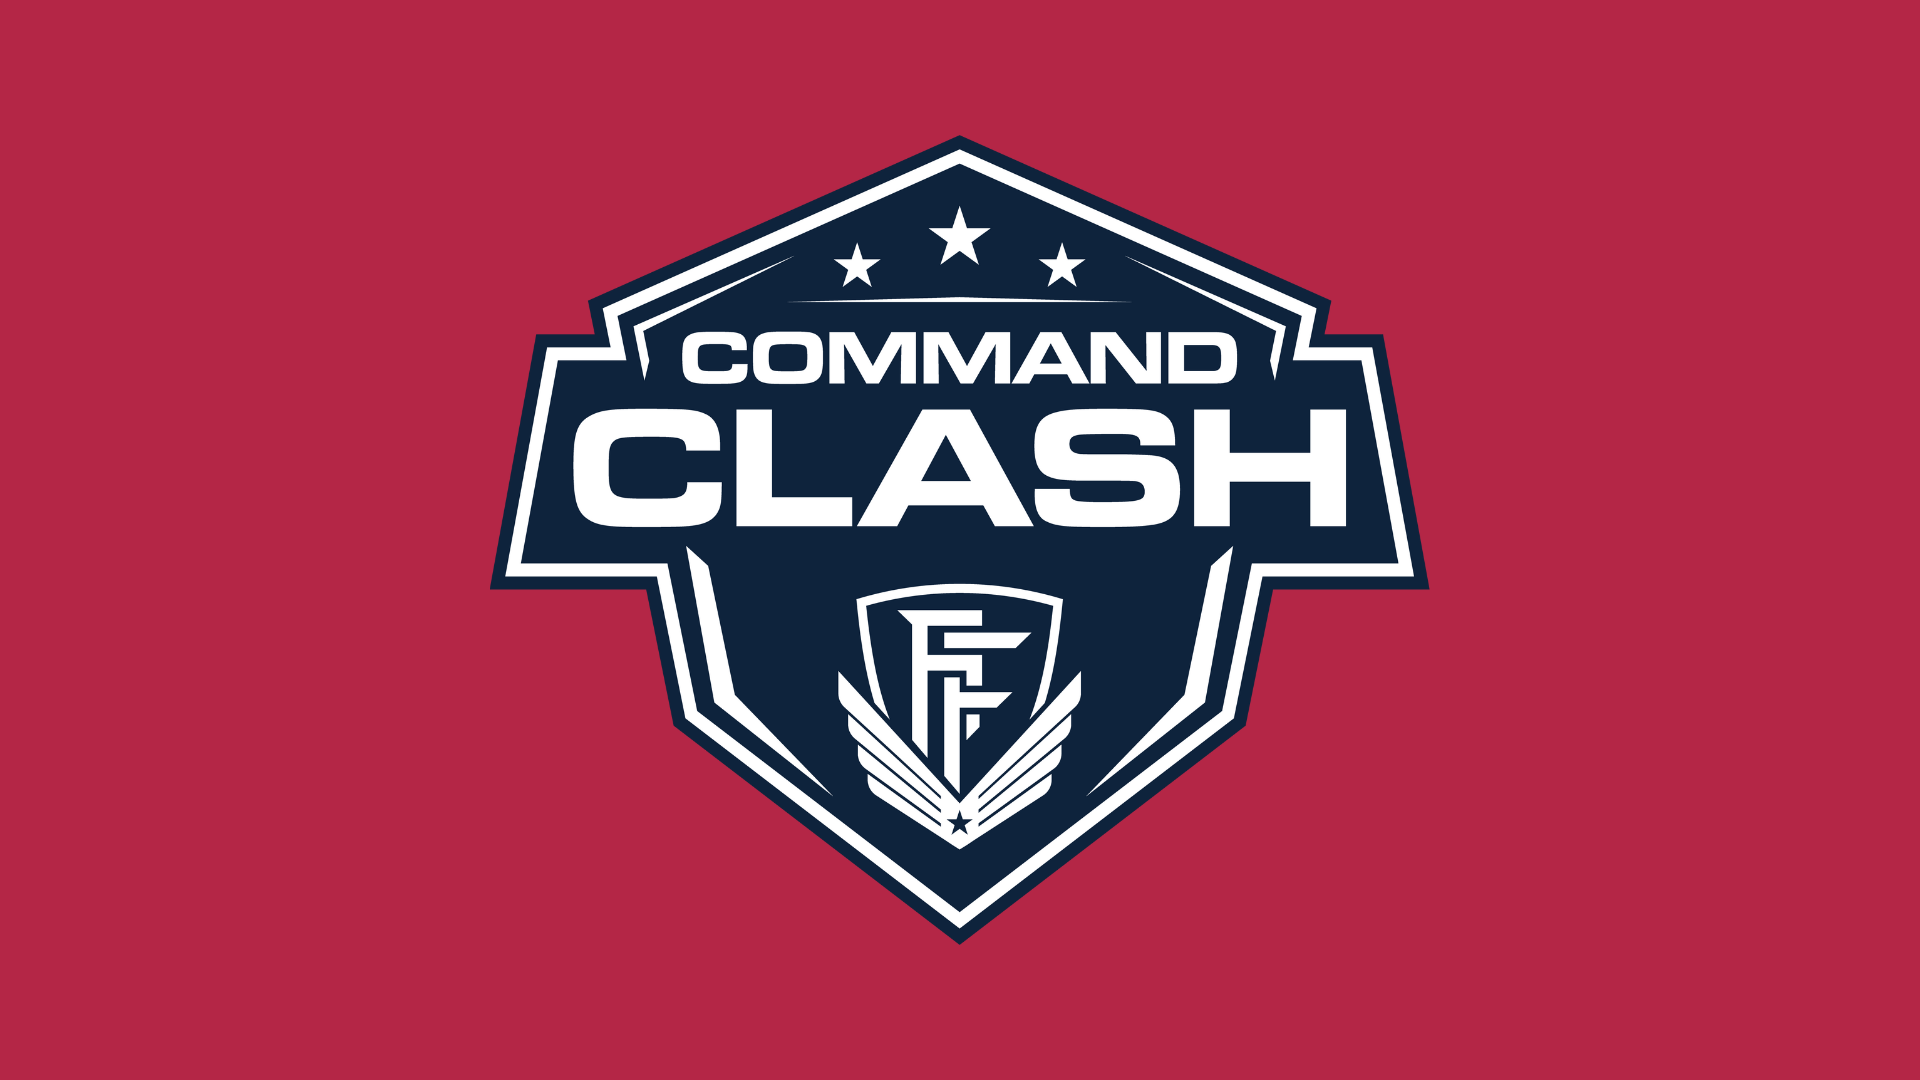 Command Clash Episode 3 - Lackland AFB